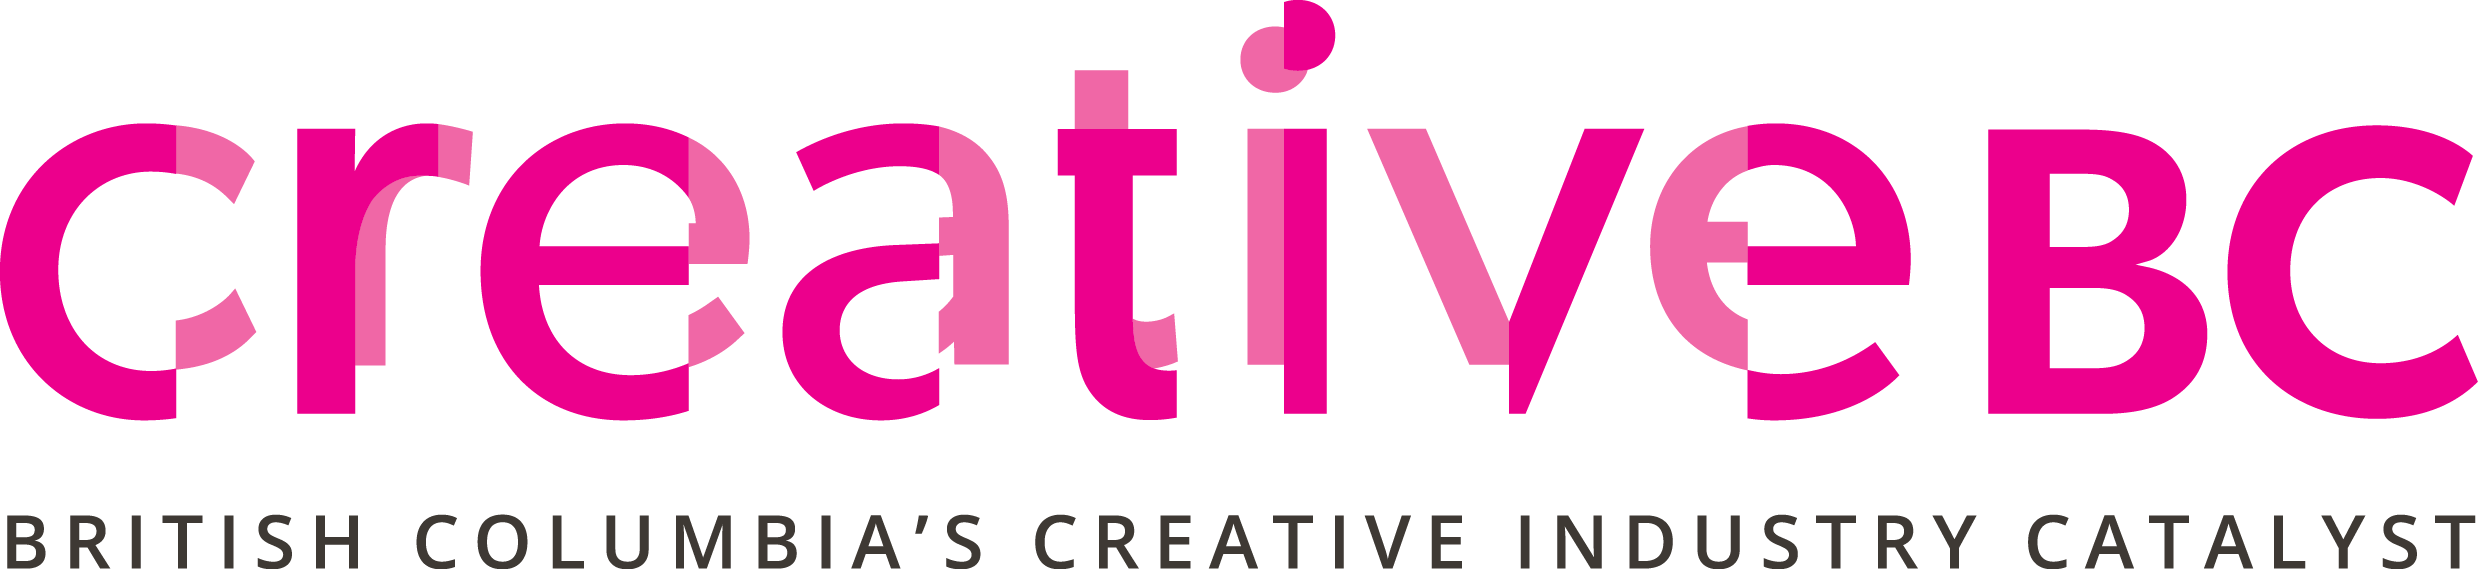 Creative BC: British Columbia's Creative Industry Catalyst